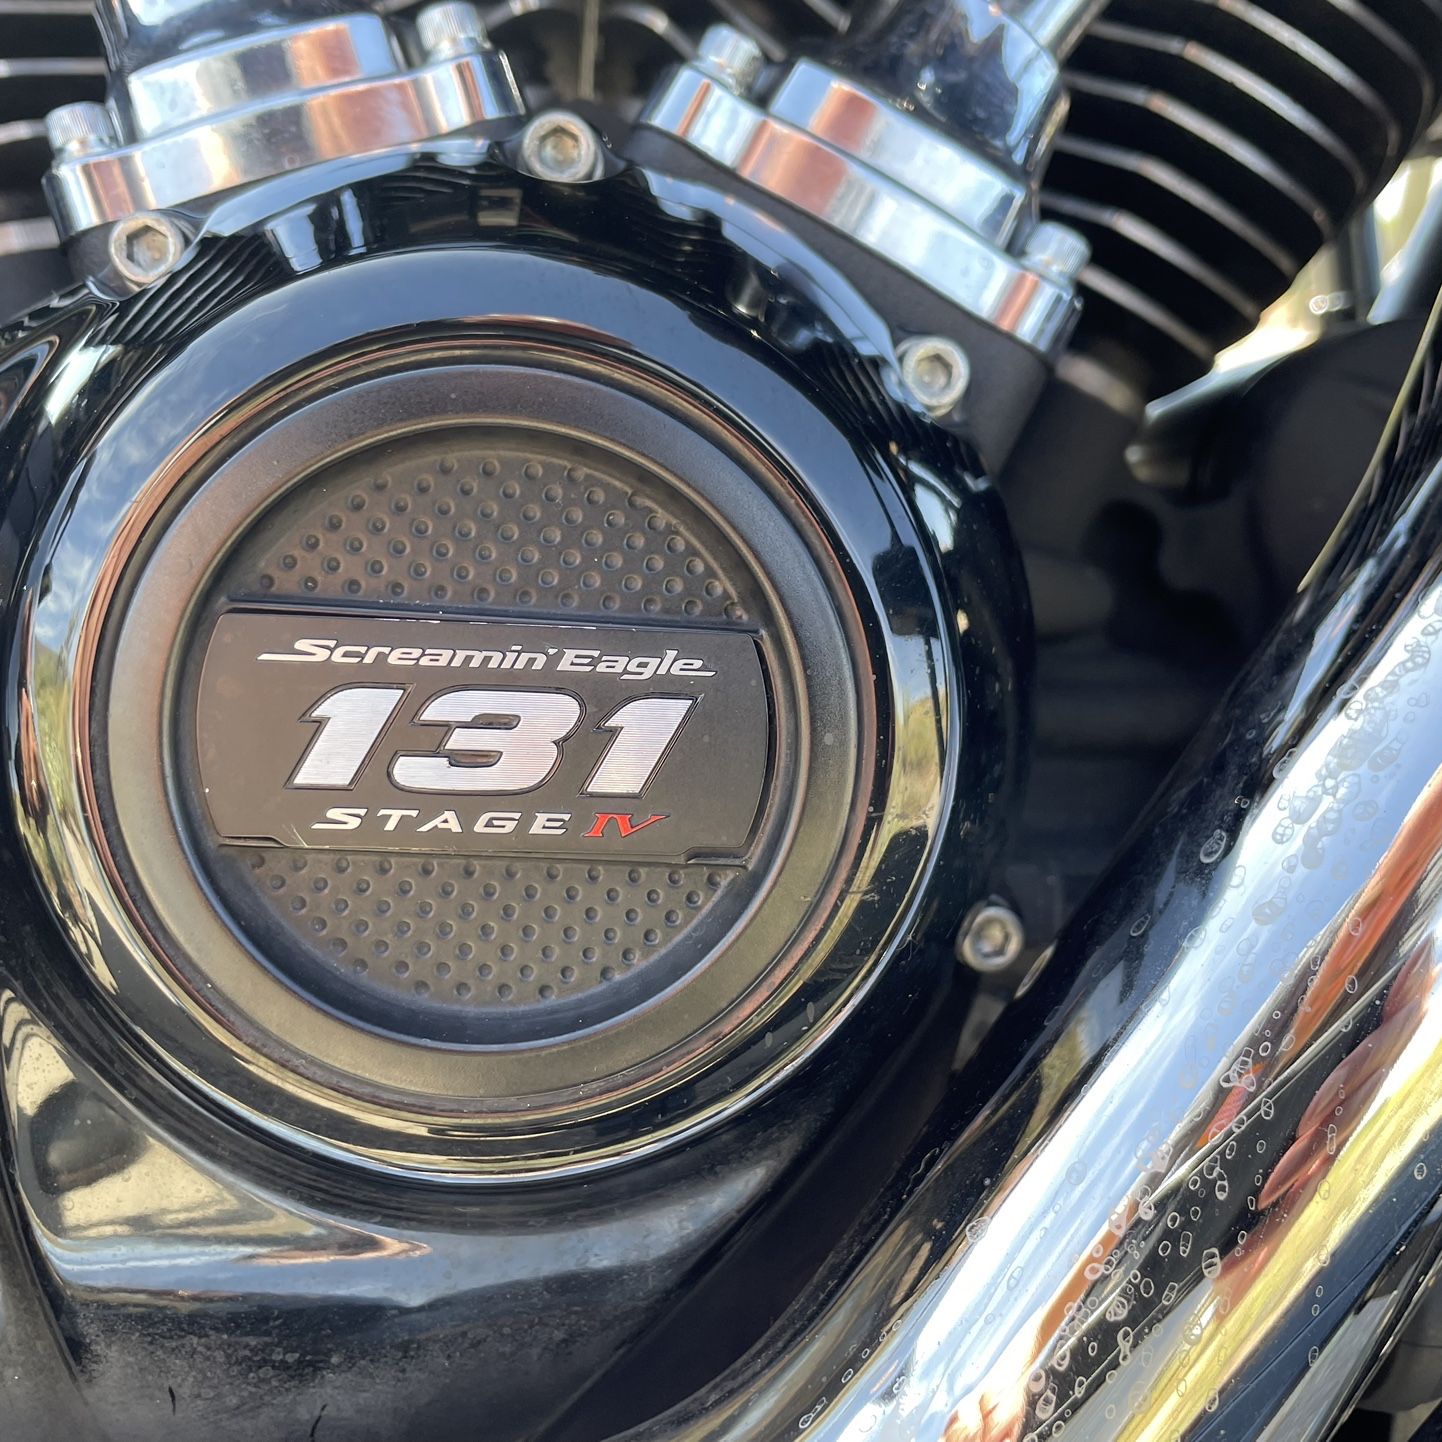 2020 Harley Davidson RoadGlide Special